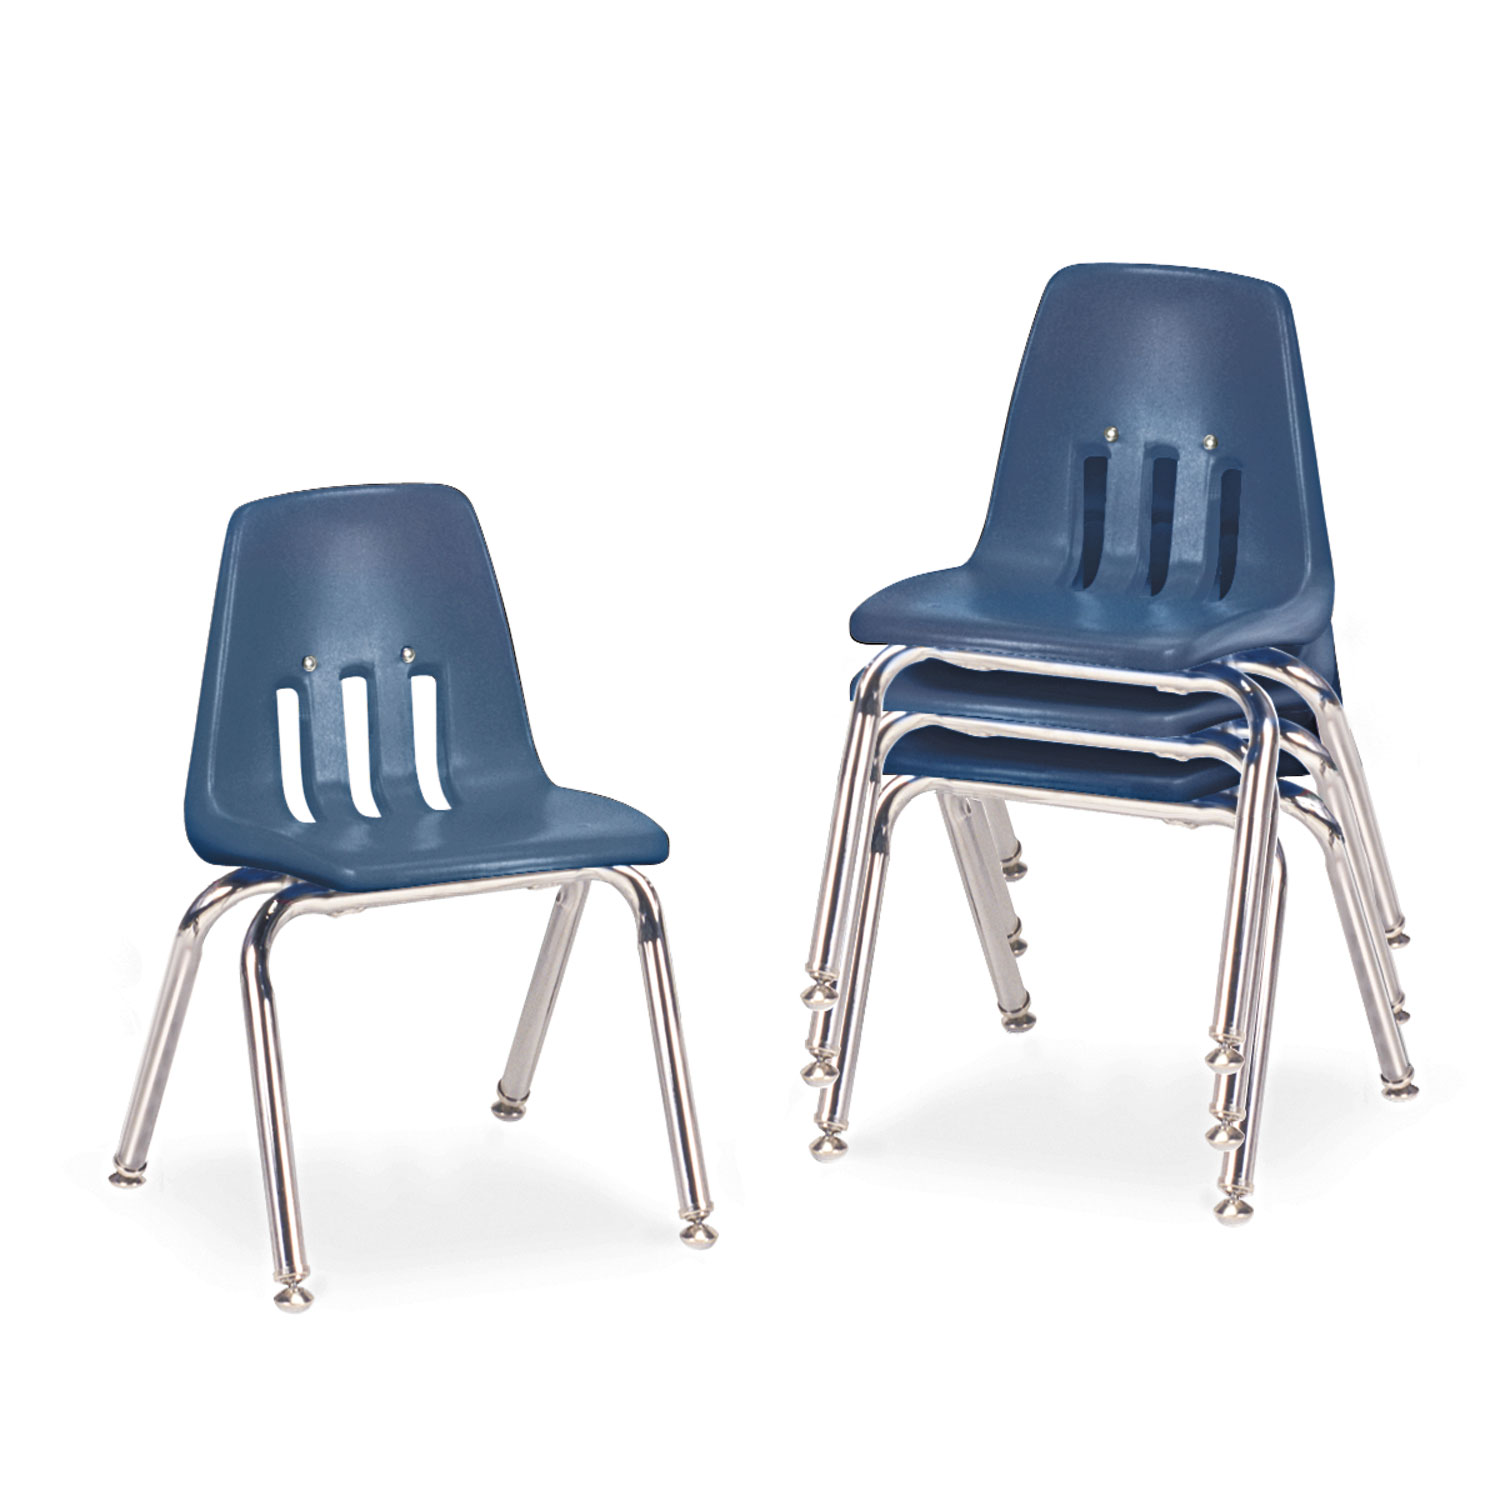 9000 Series Classroom Chairs, 14 Seat Height, Navy/Chrome, 4/Carton